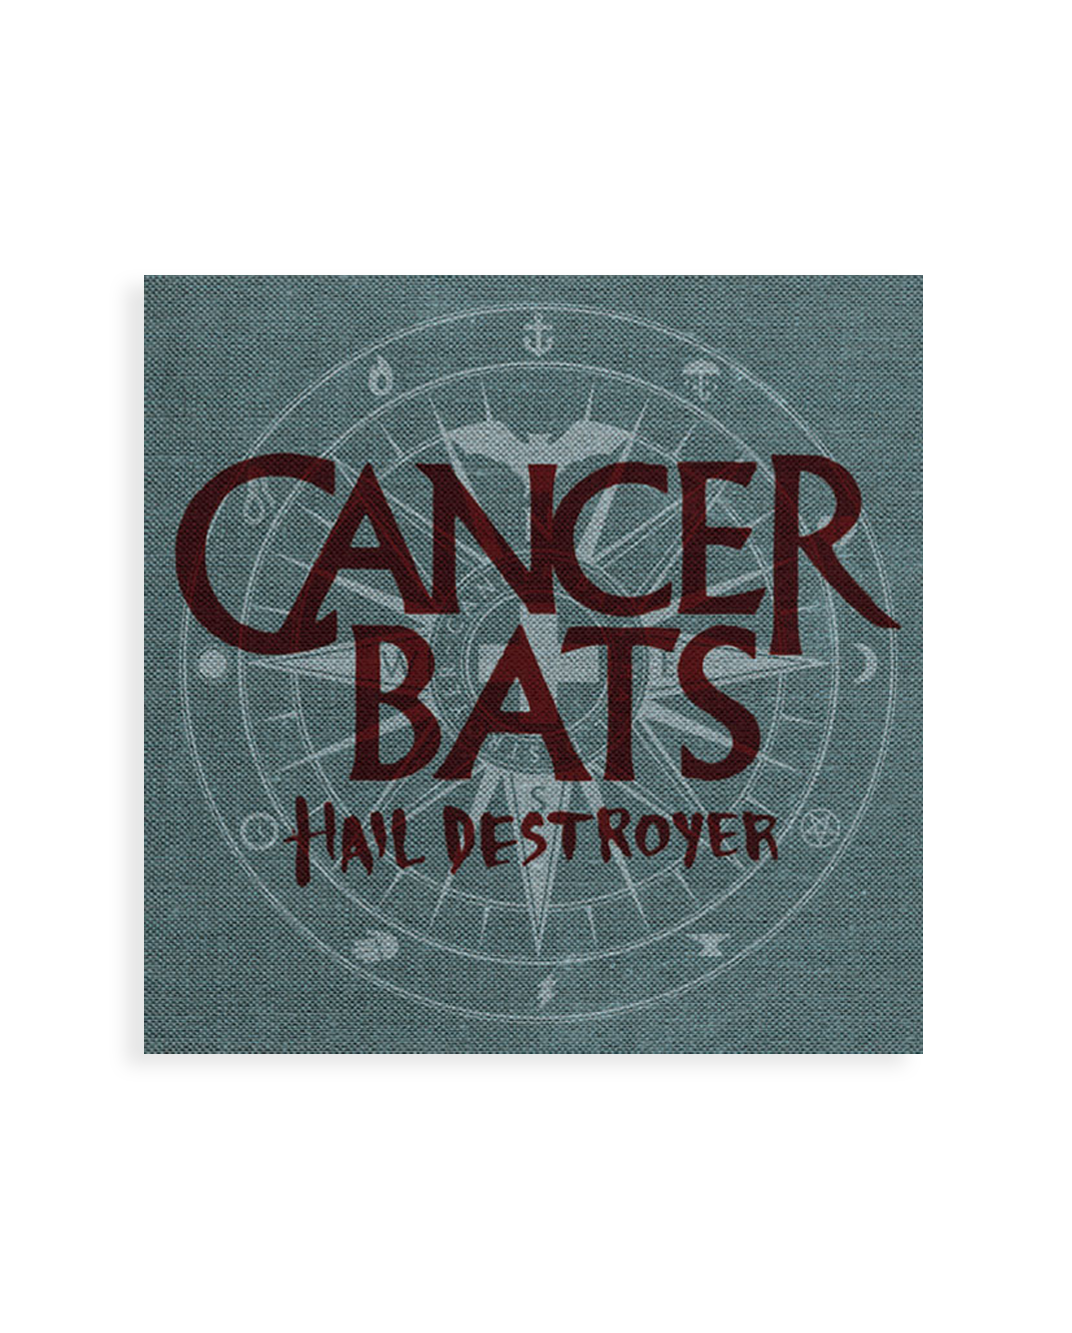 Cancer Bats Hail Destroyer LP